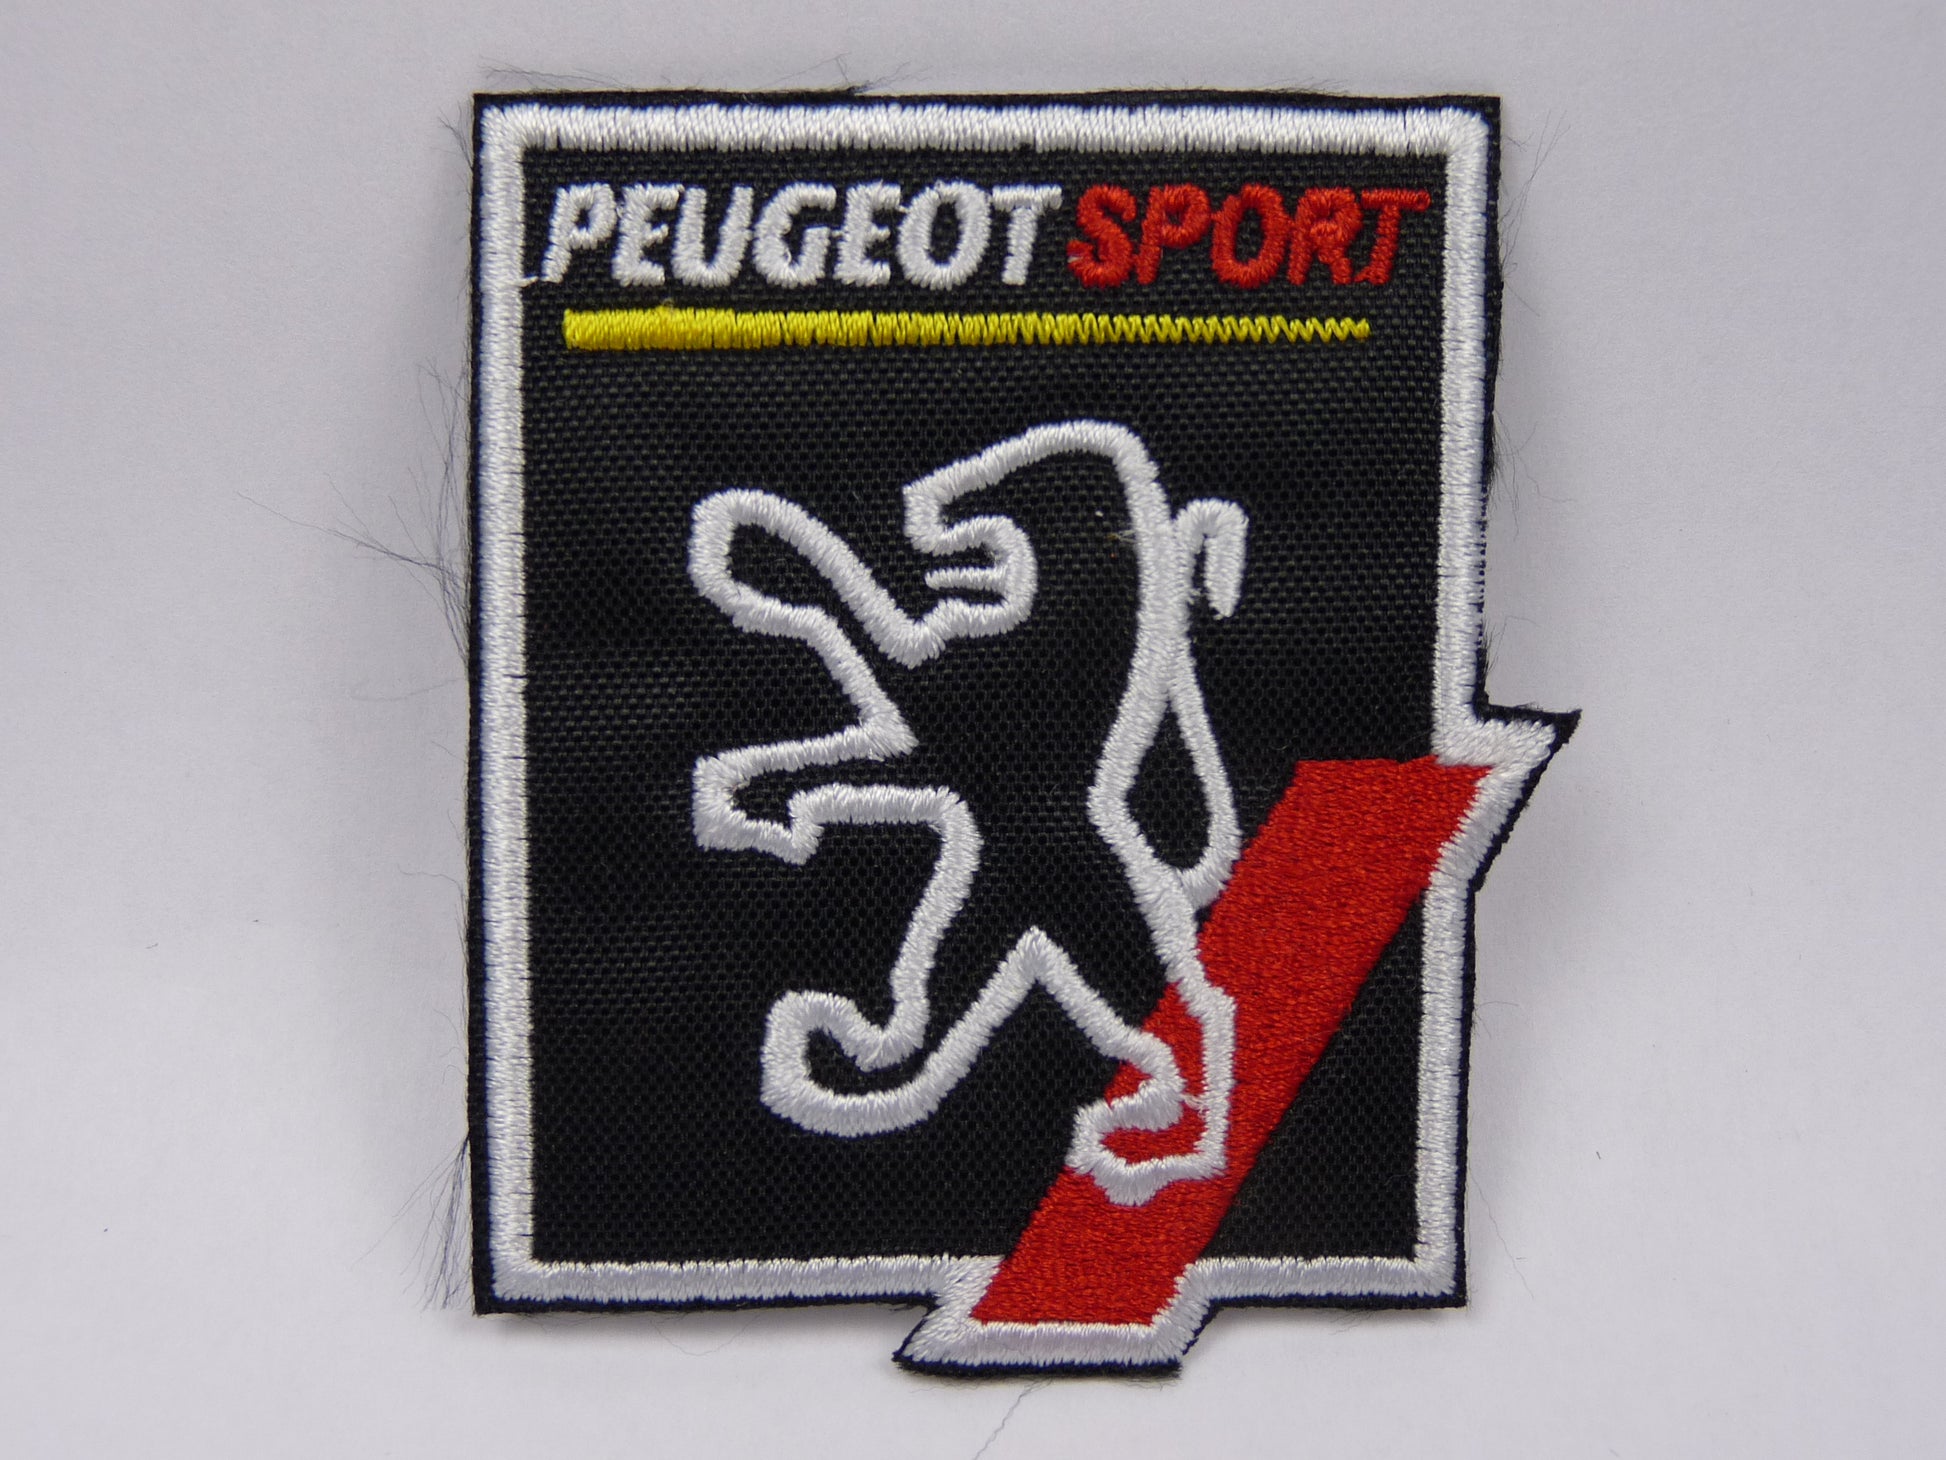 PTC110 Patch brodé thermocollé : logo Peugeot sport largeur